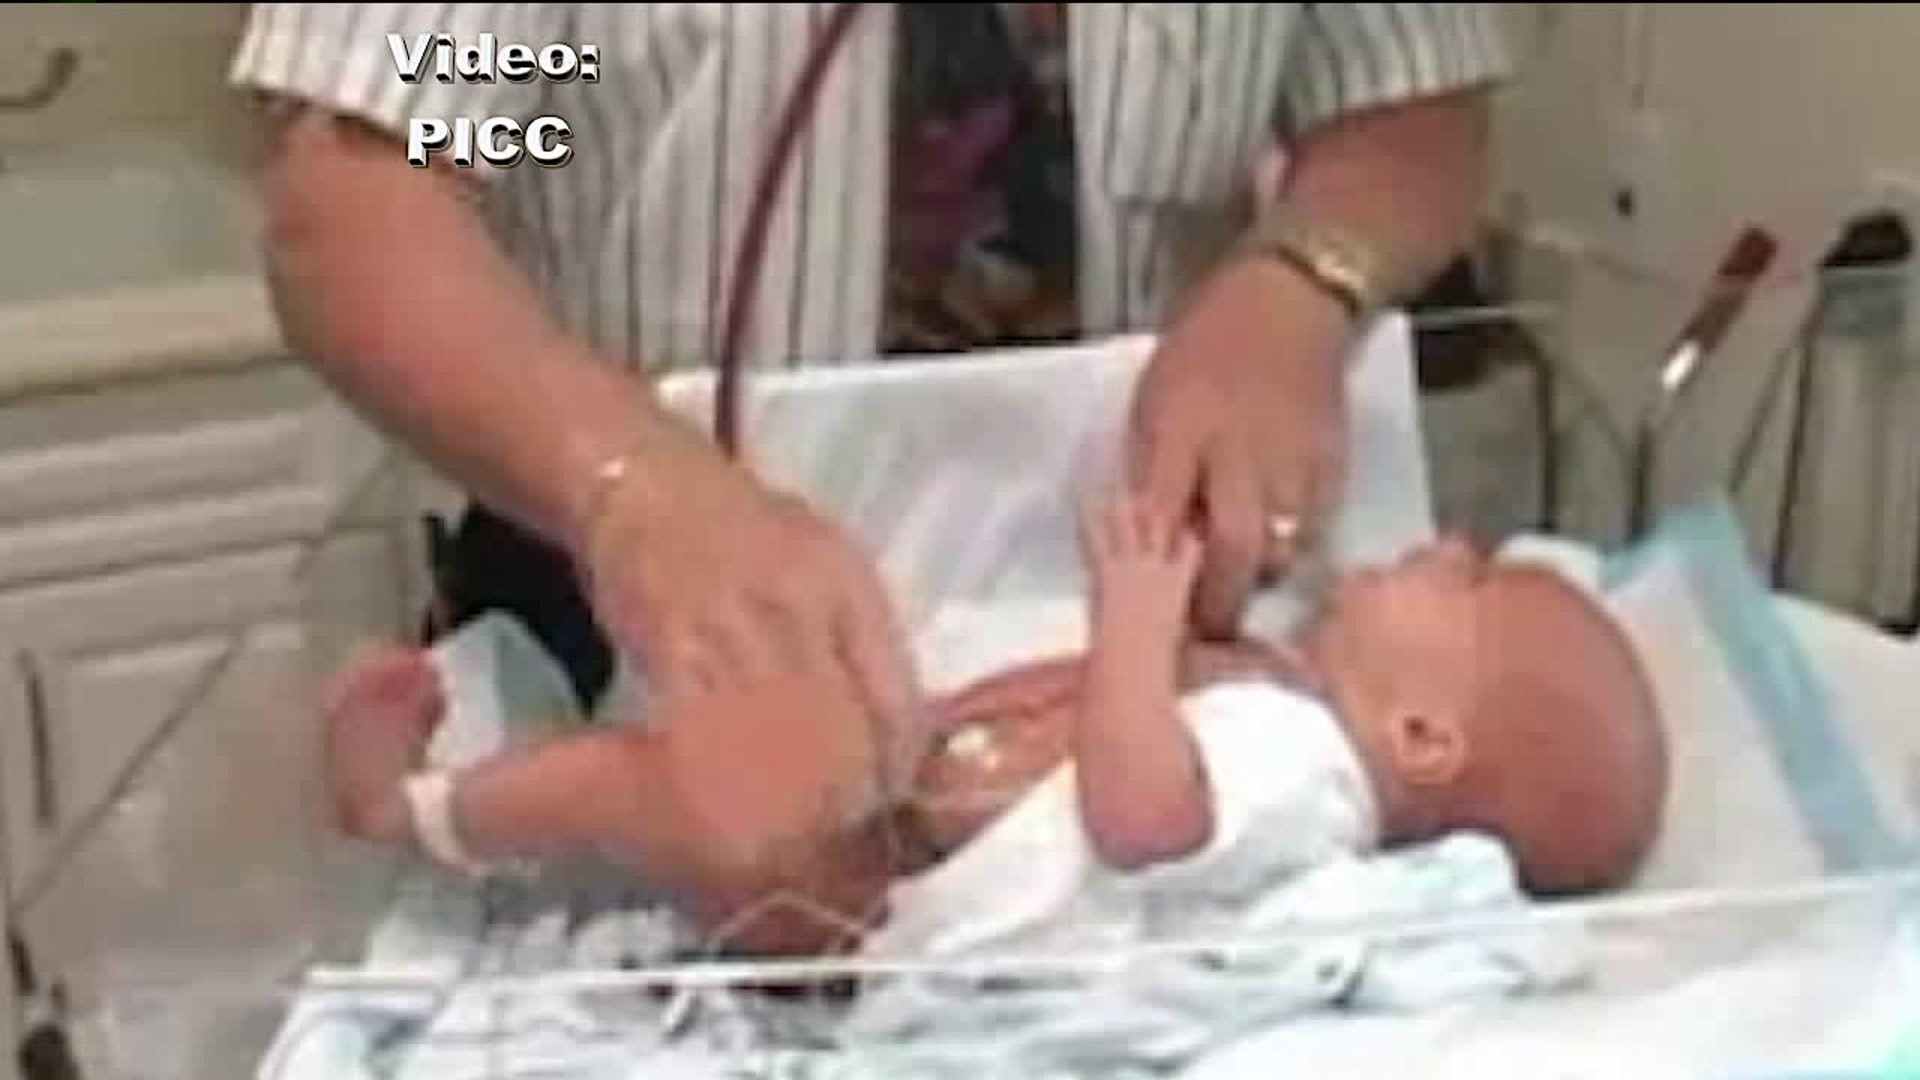 'It's heartbreaking' - Helping Babies Born Addicted